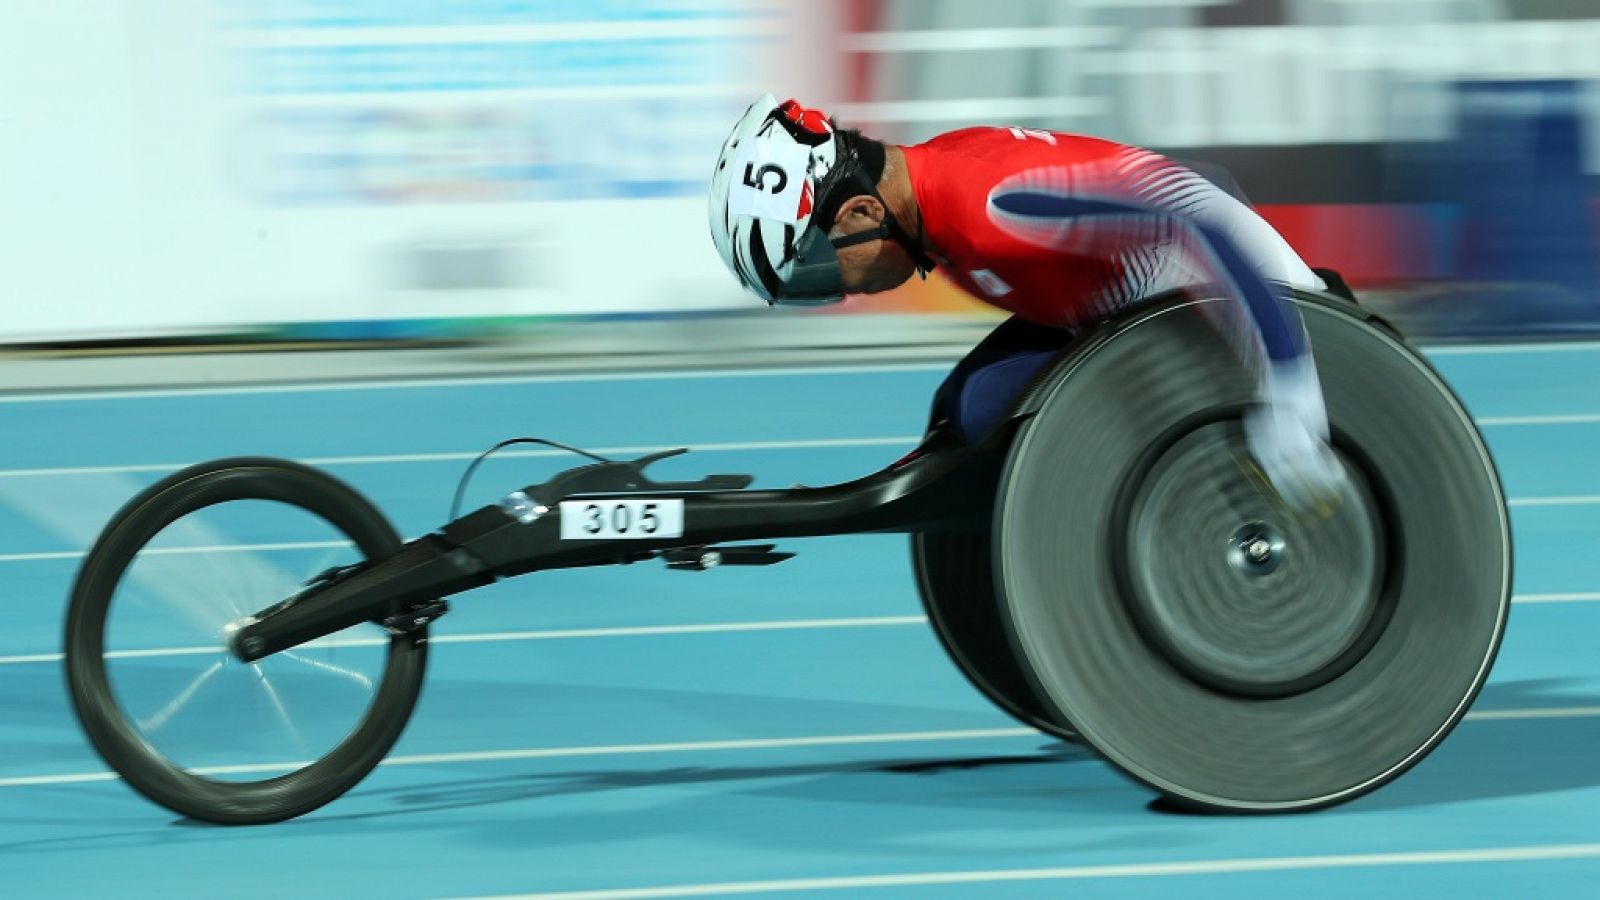 Atletismo - Campeonato del Mundo Paralímpico. Resumen 2ª jornada, desde Dubai (Emiratos Árabes) - RTVE.es